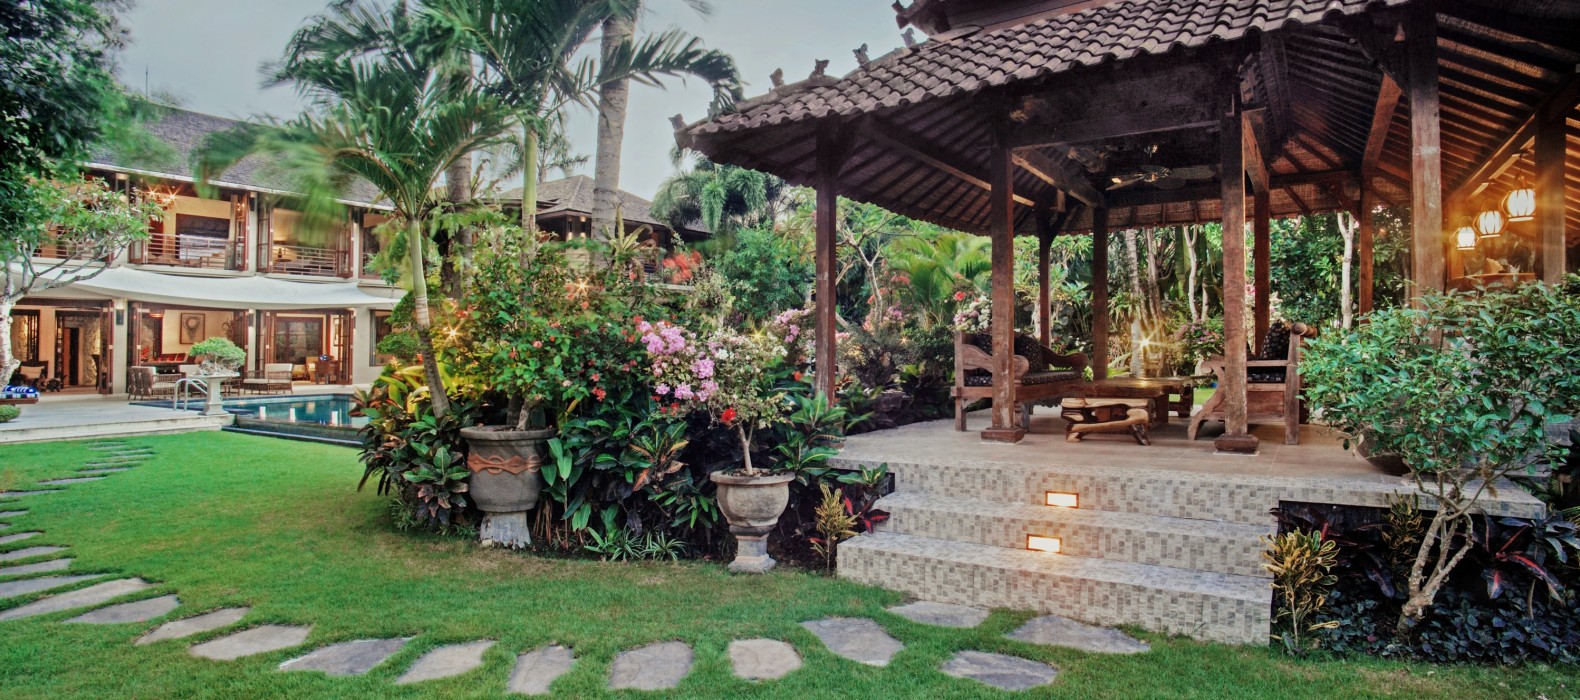 Garden of Villa Amaia in Bali